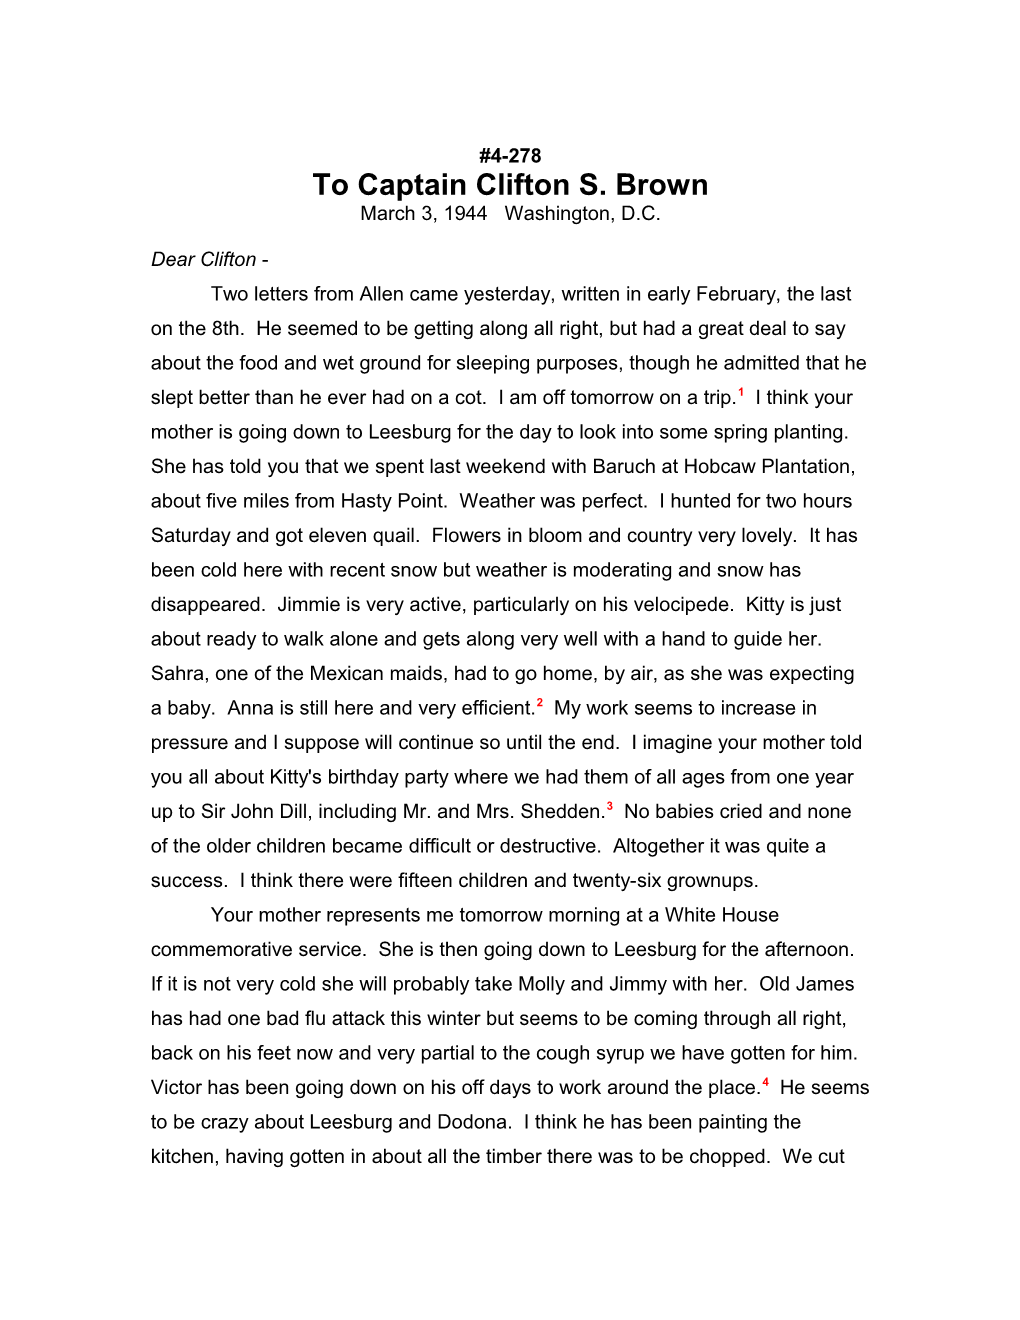 To Captain Clifton S. Brown